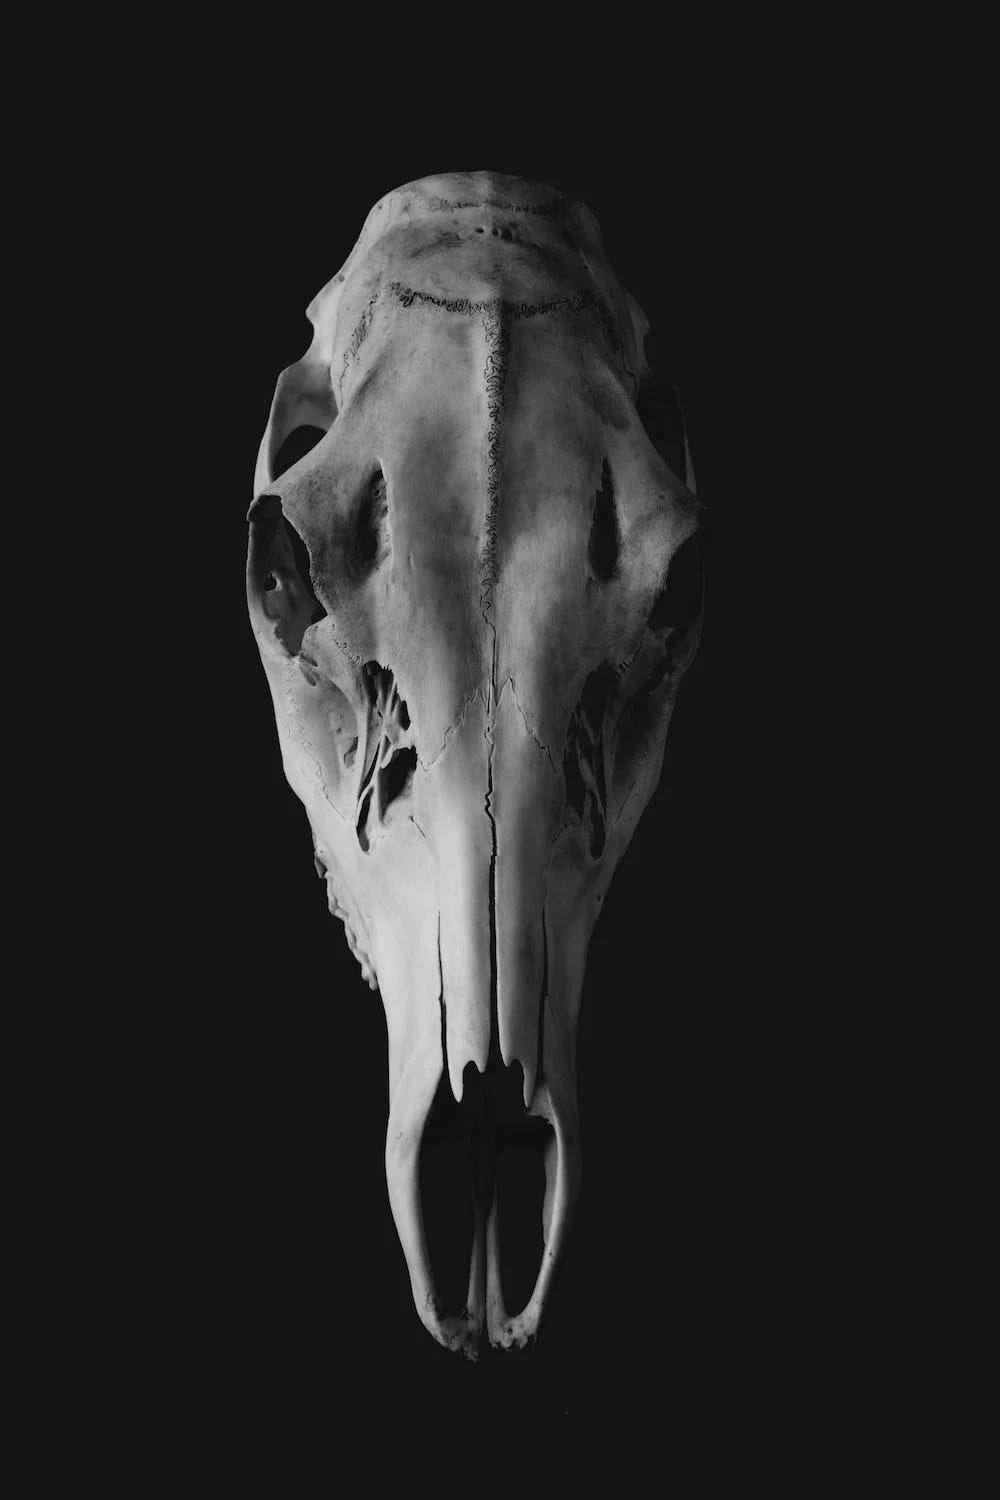 White boar skull on a black background